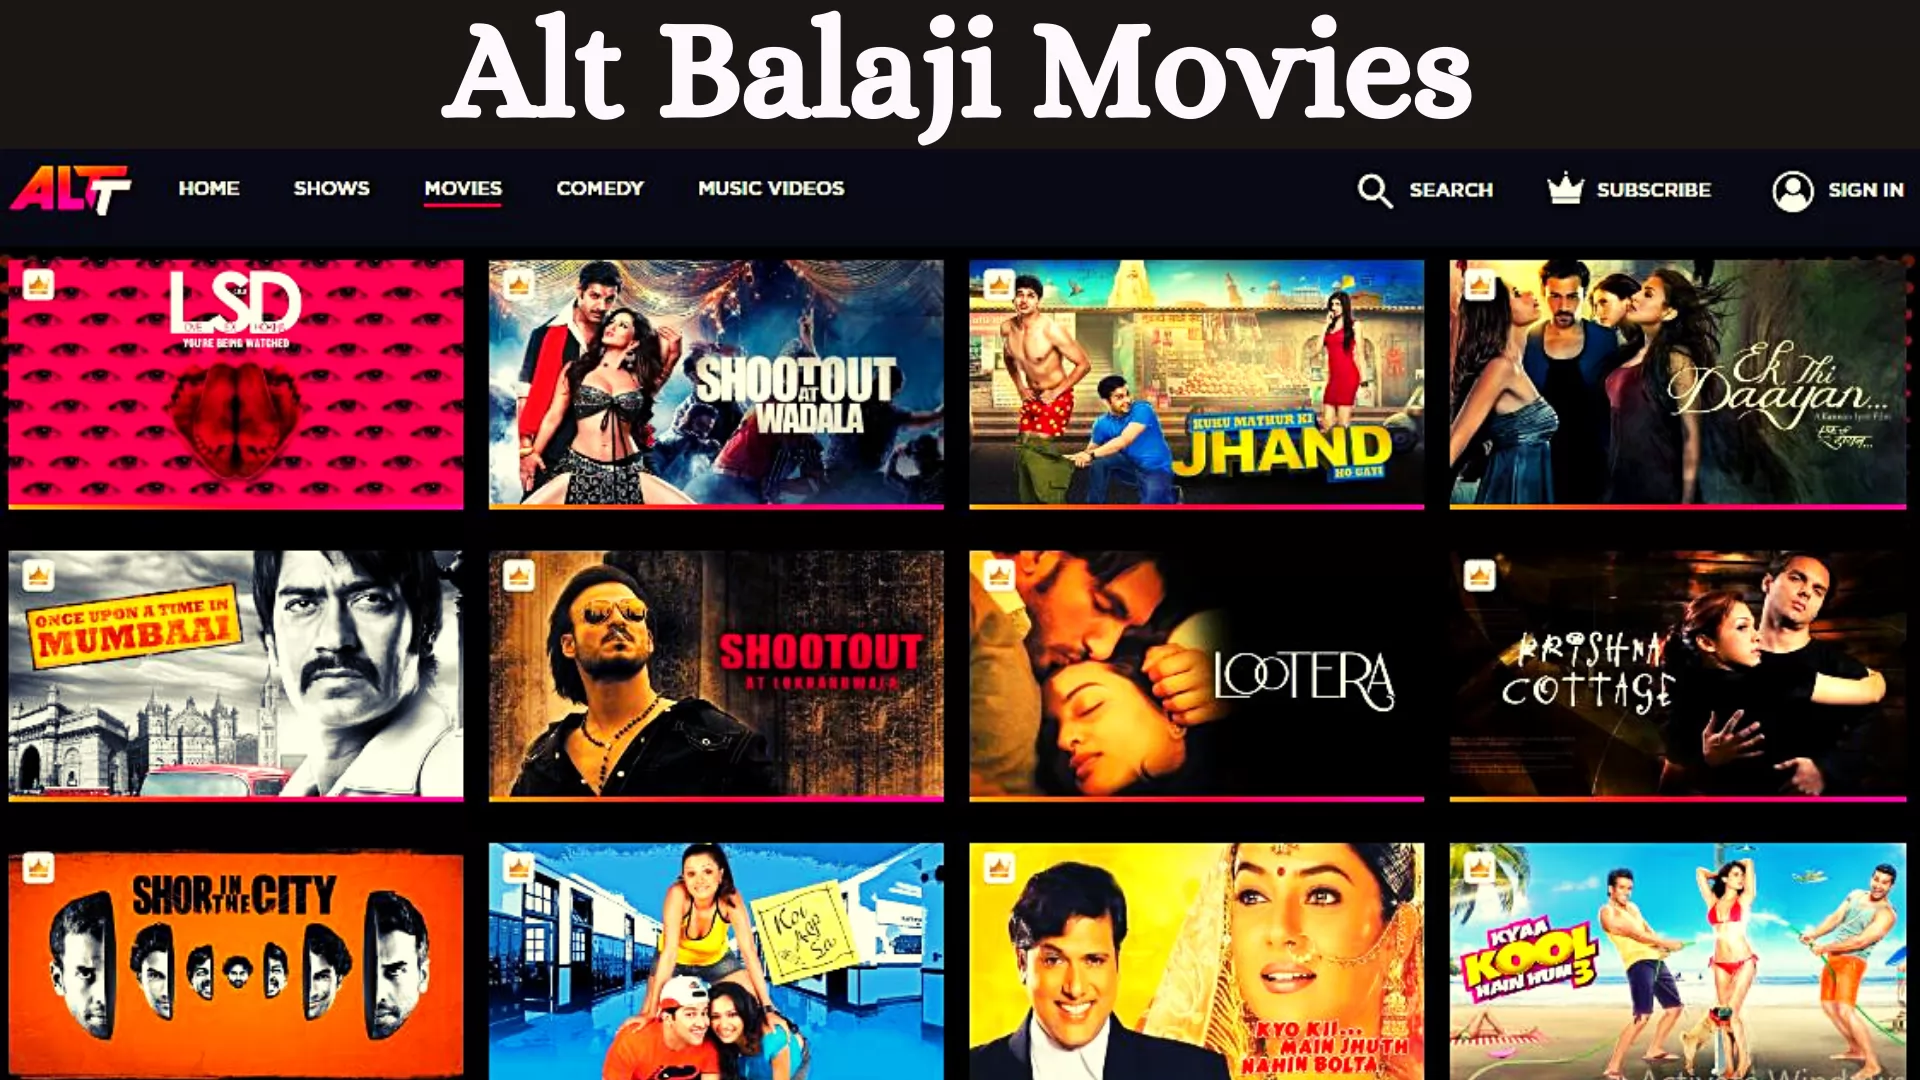 Alt Balaji Movies